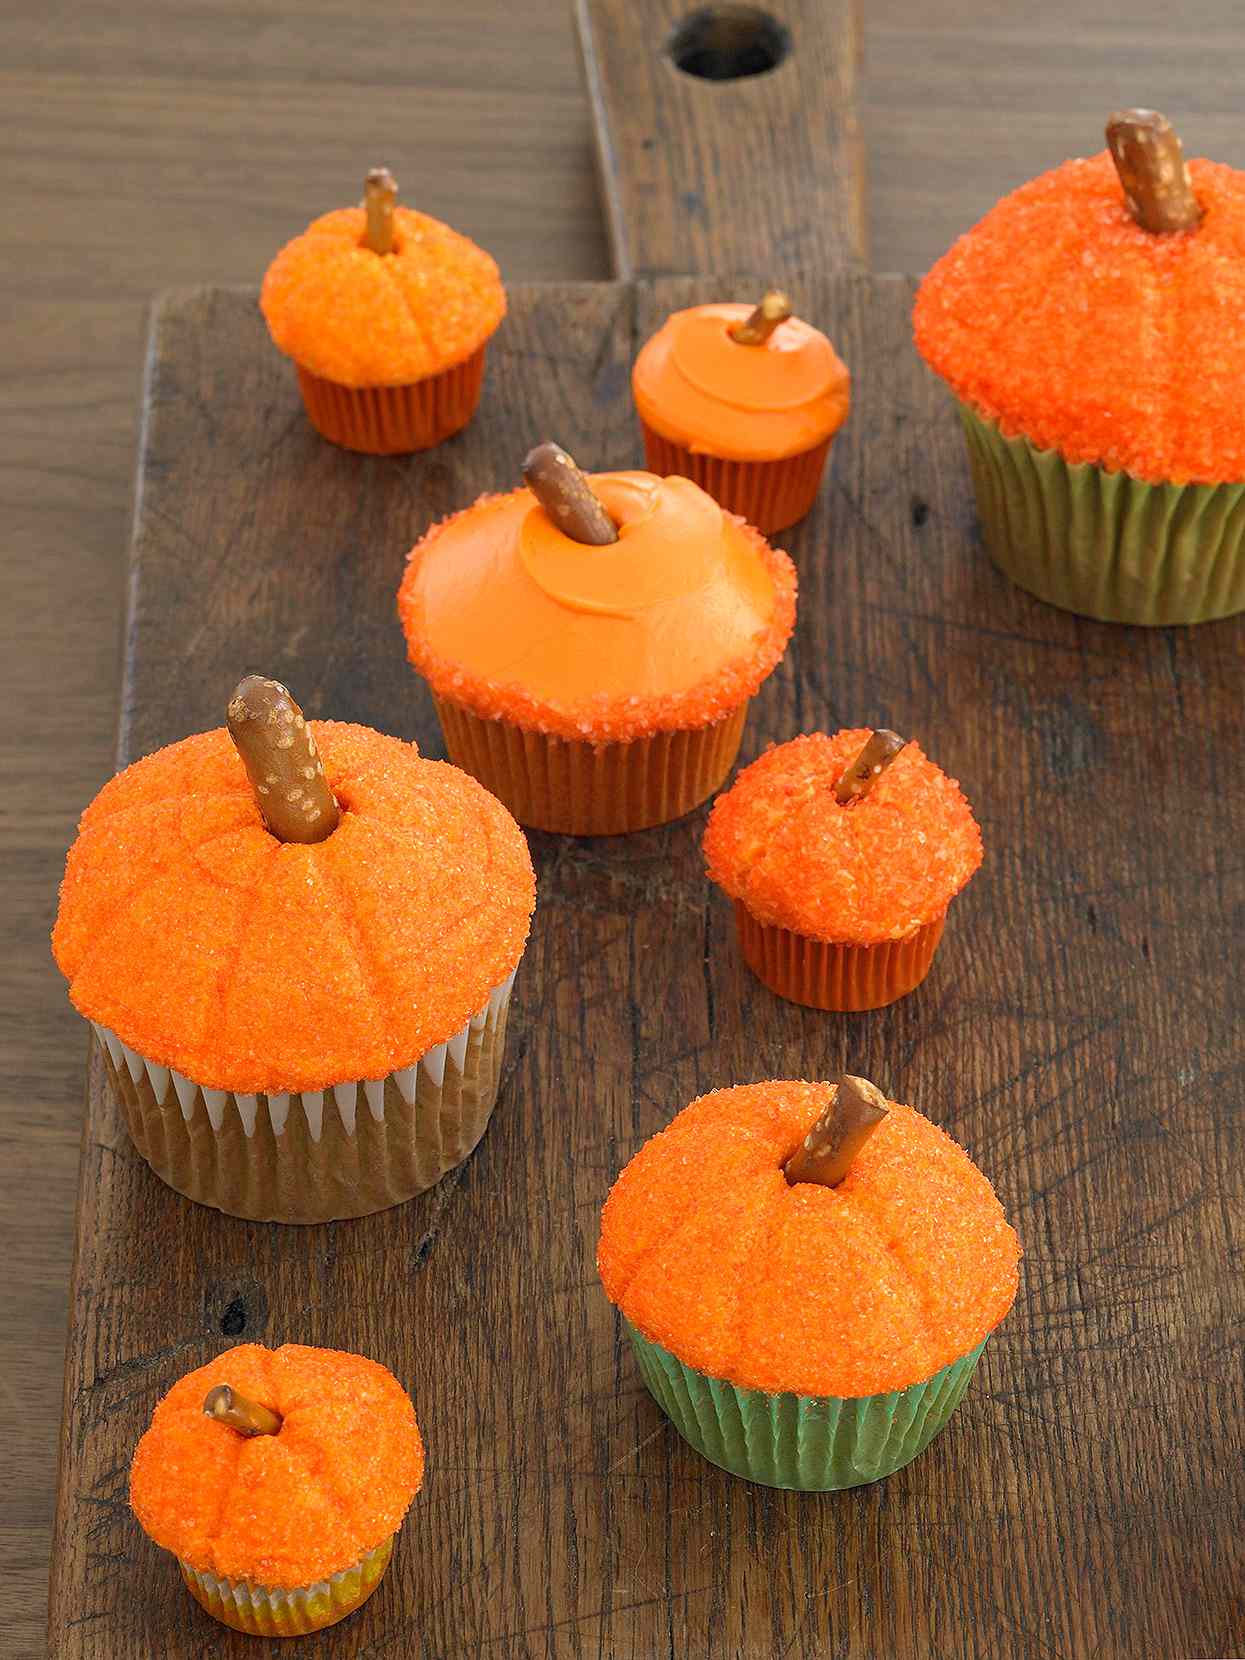 Easy Pumpkin Cupcakes